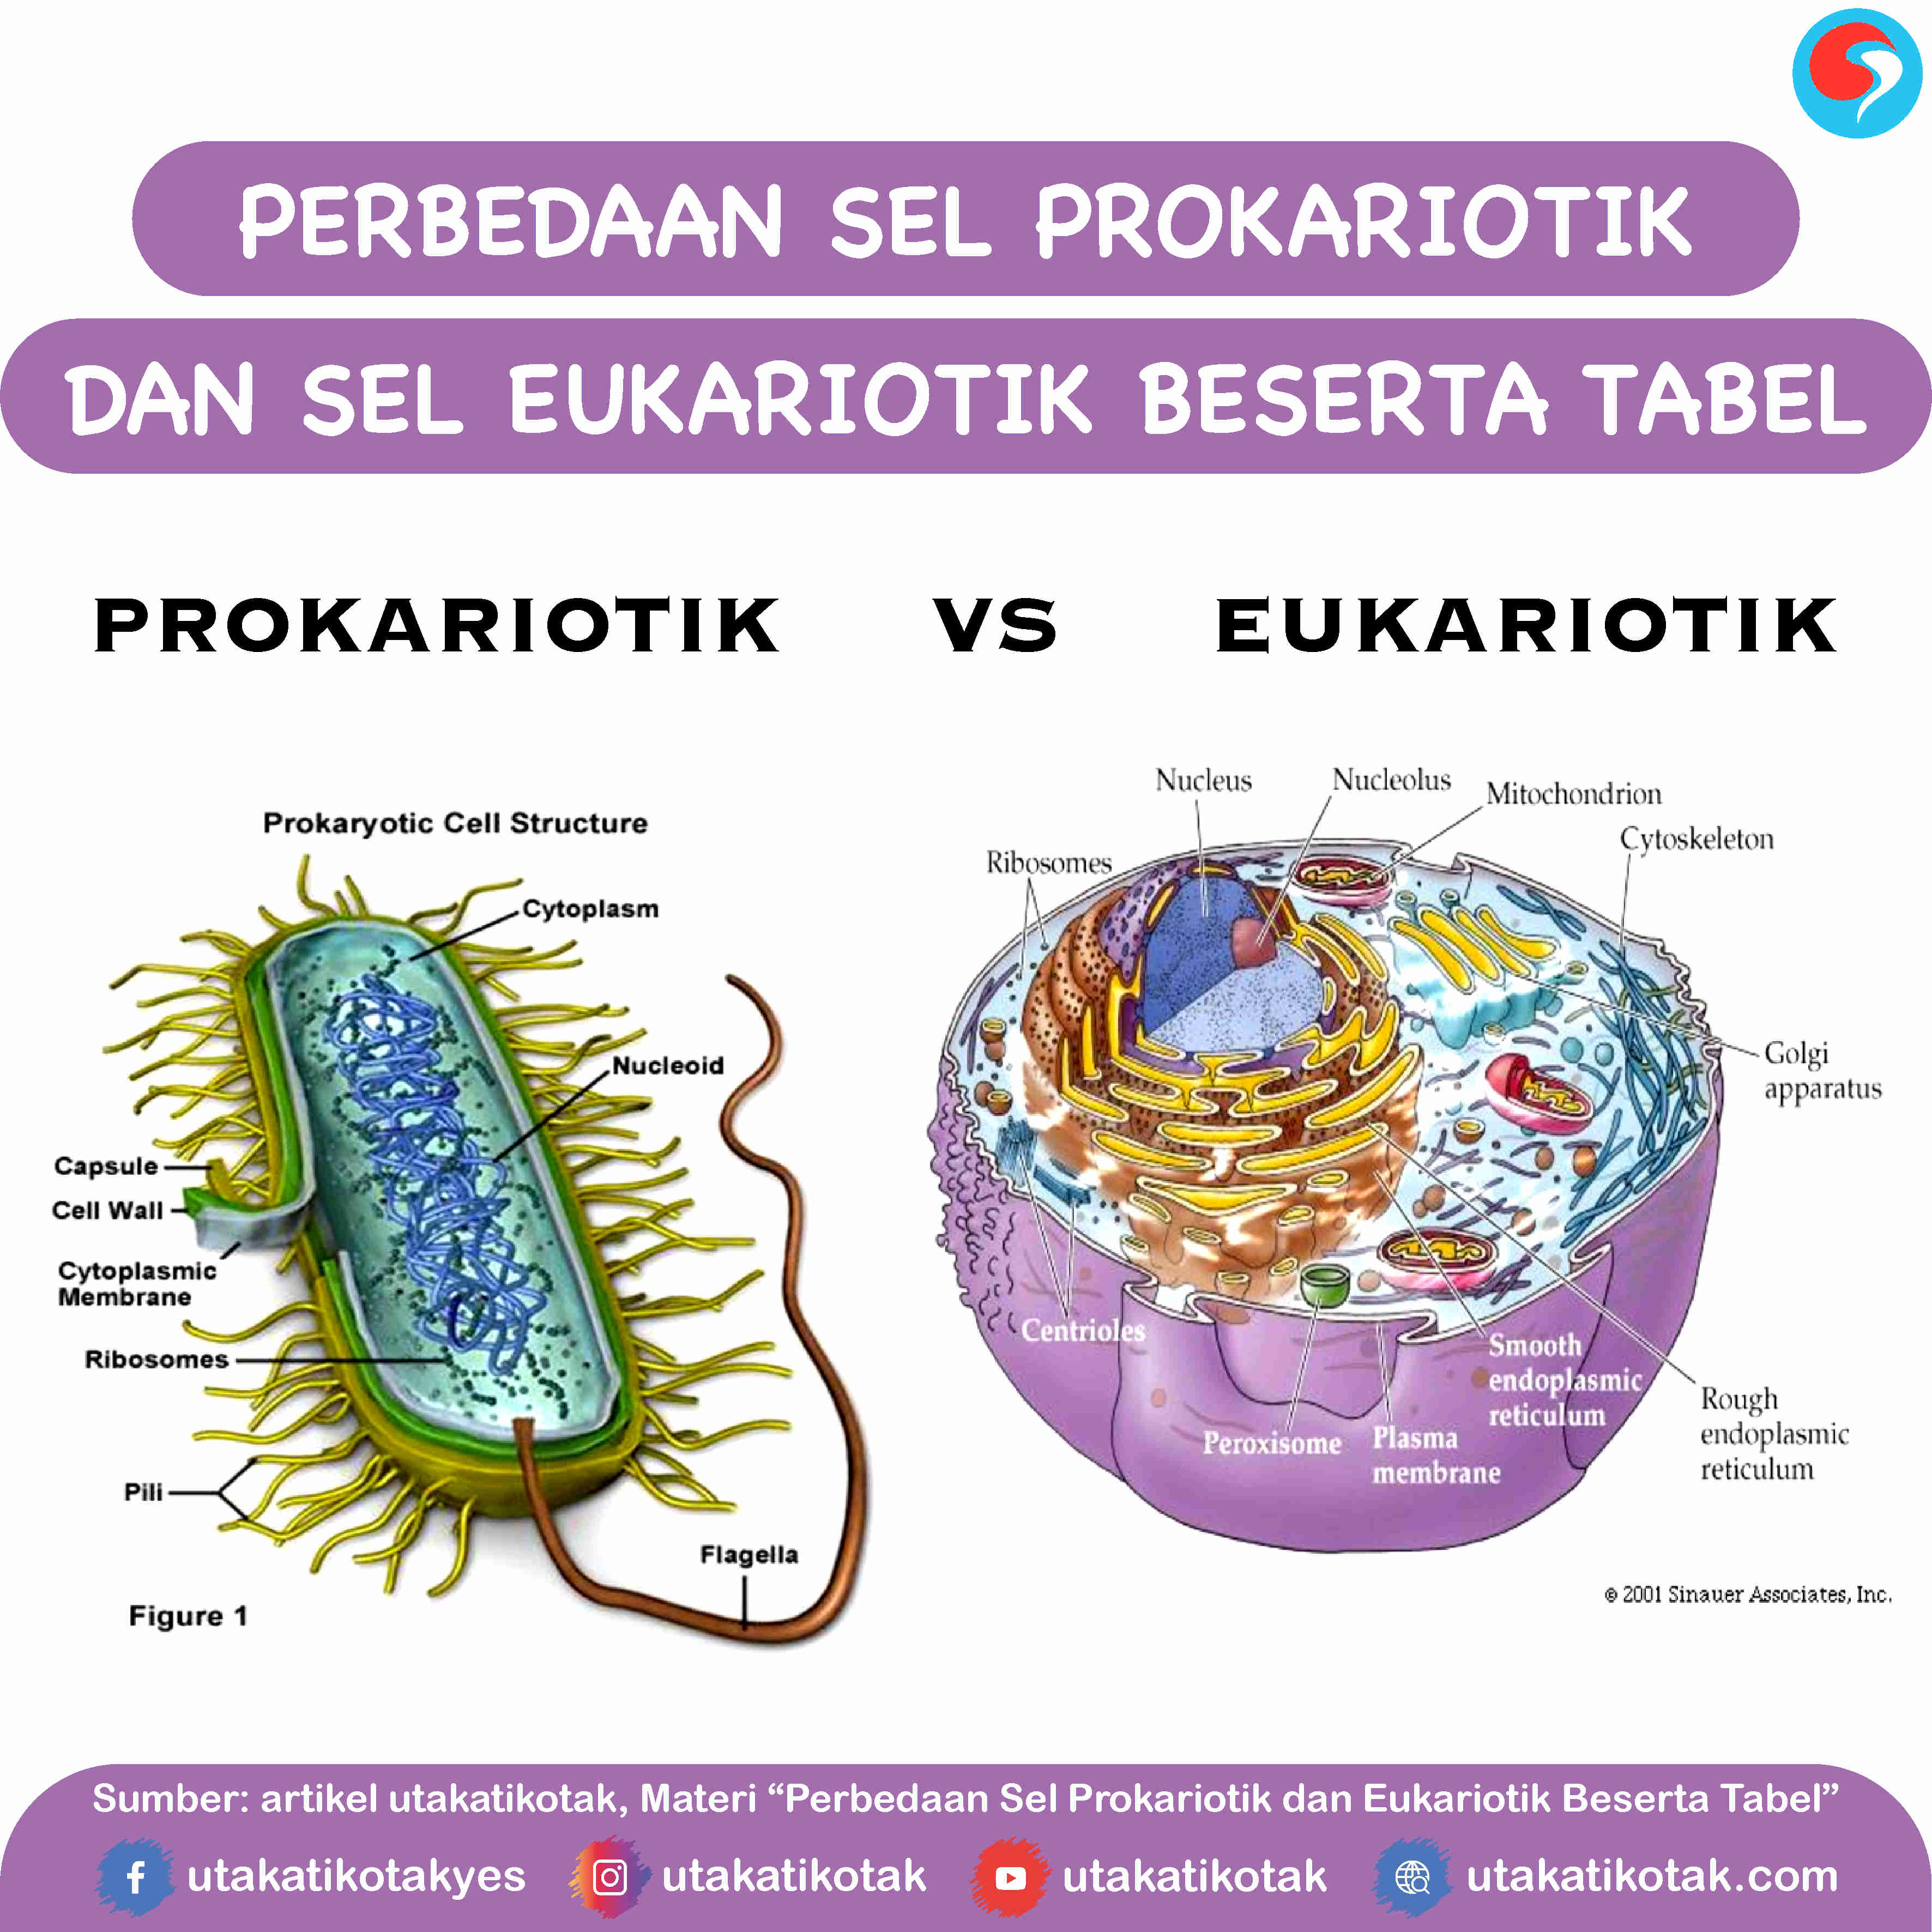 Gambar Sel Eukariotik Dan Prokariotik Lengkap